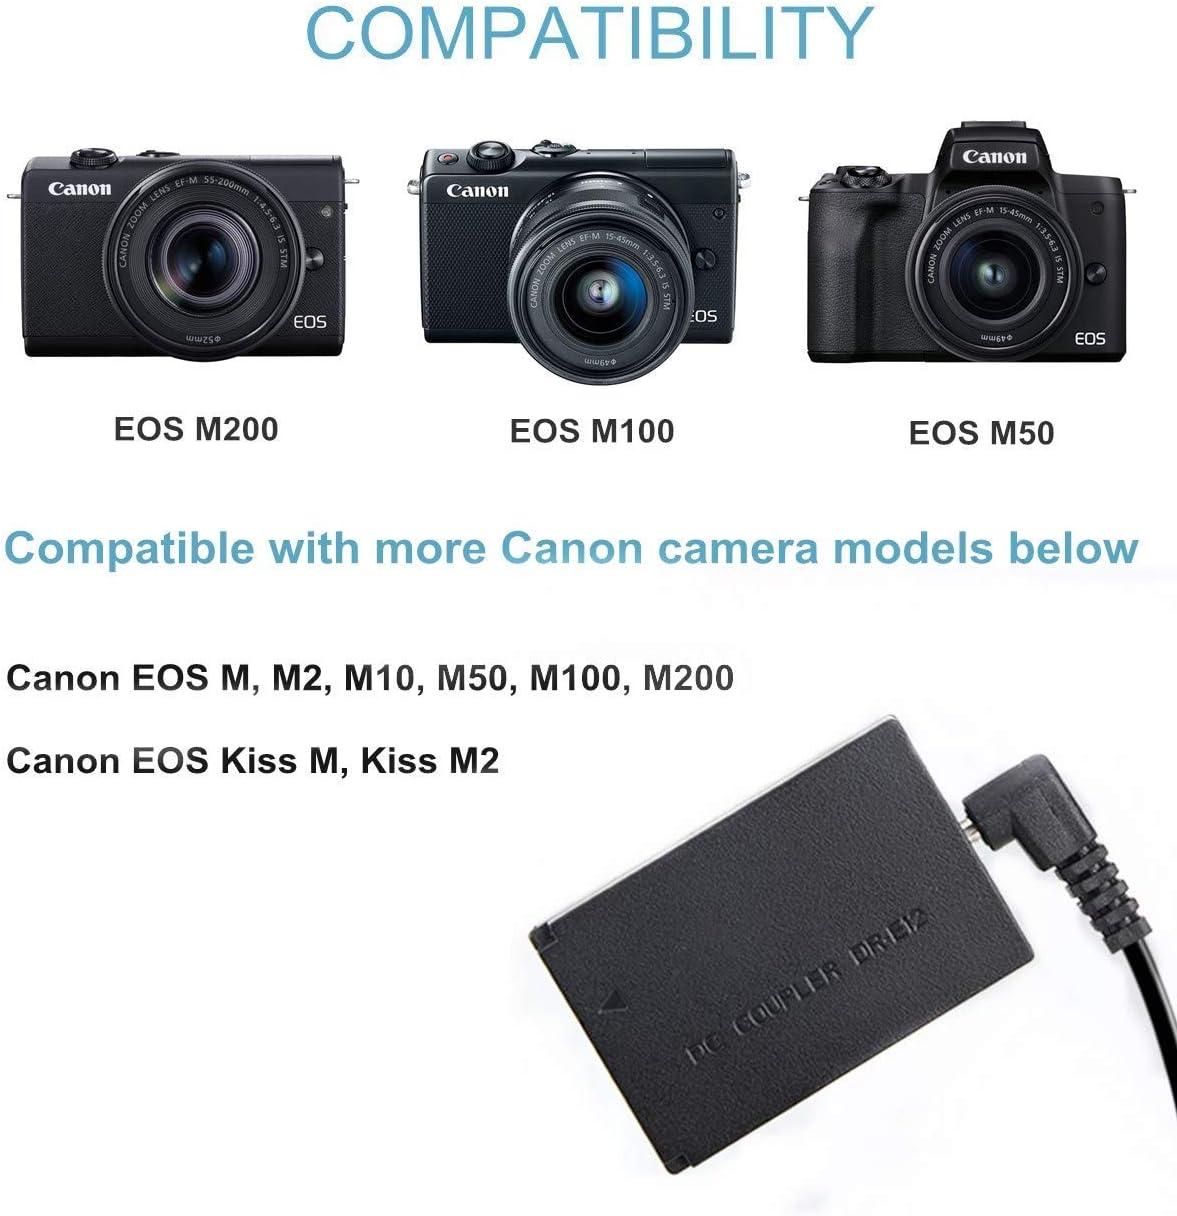 Canon EOS M50 MARK II, price in Kenya